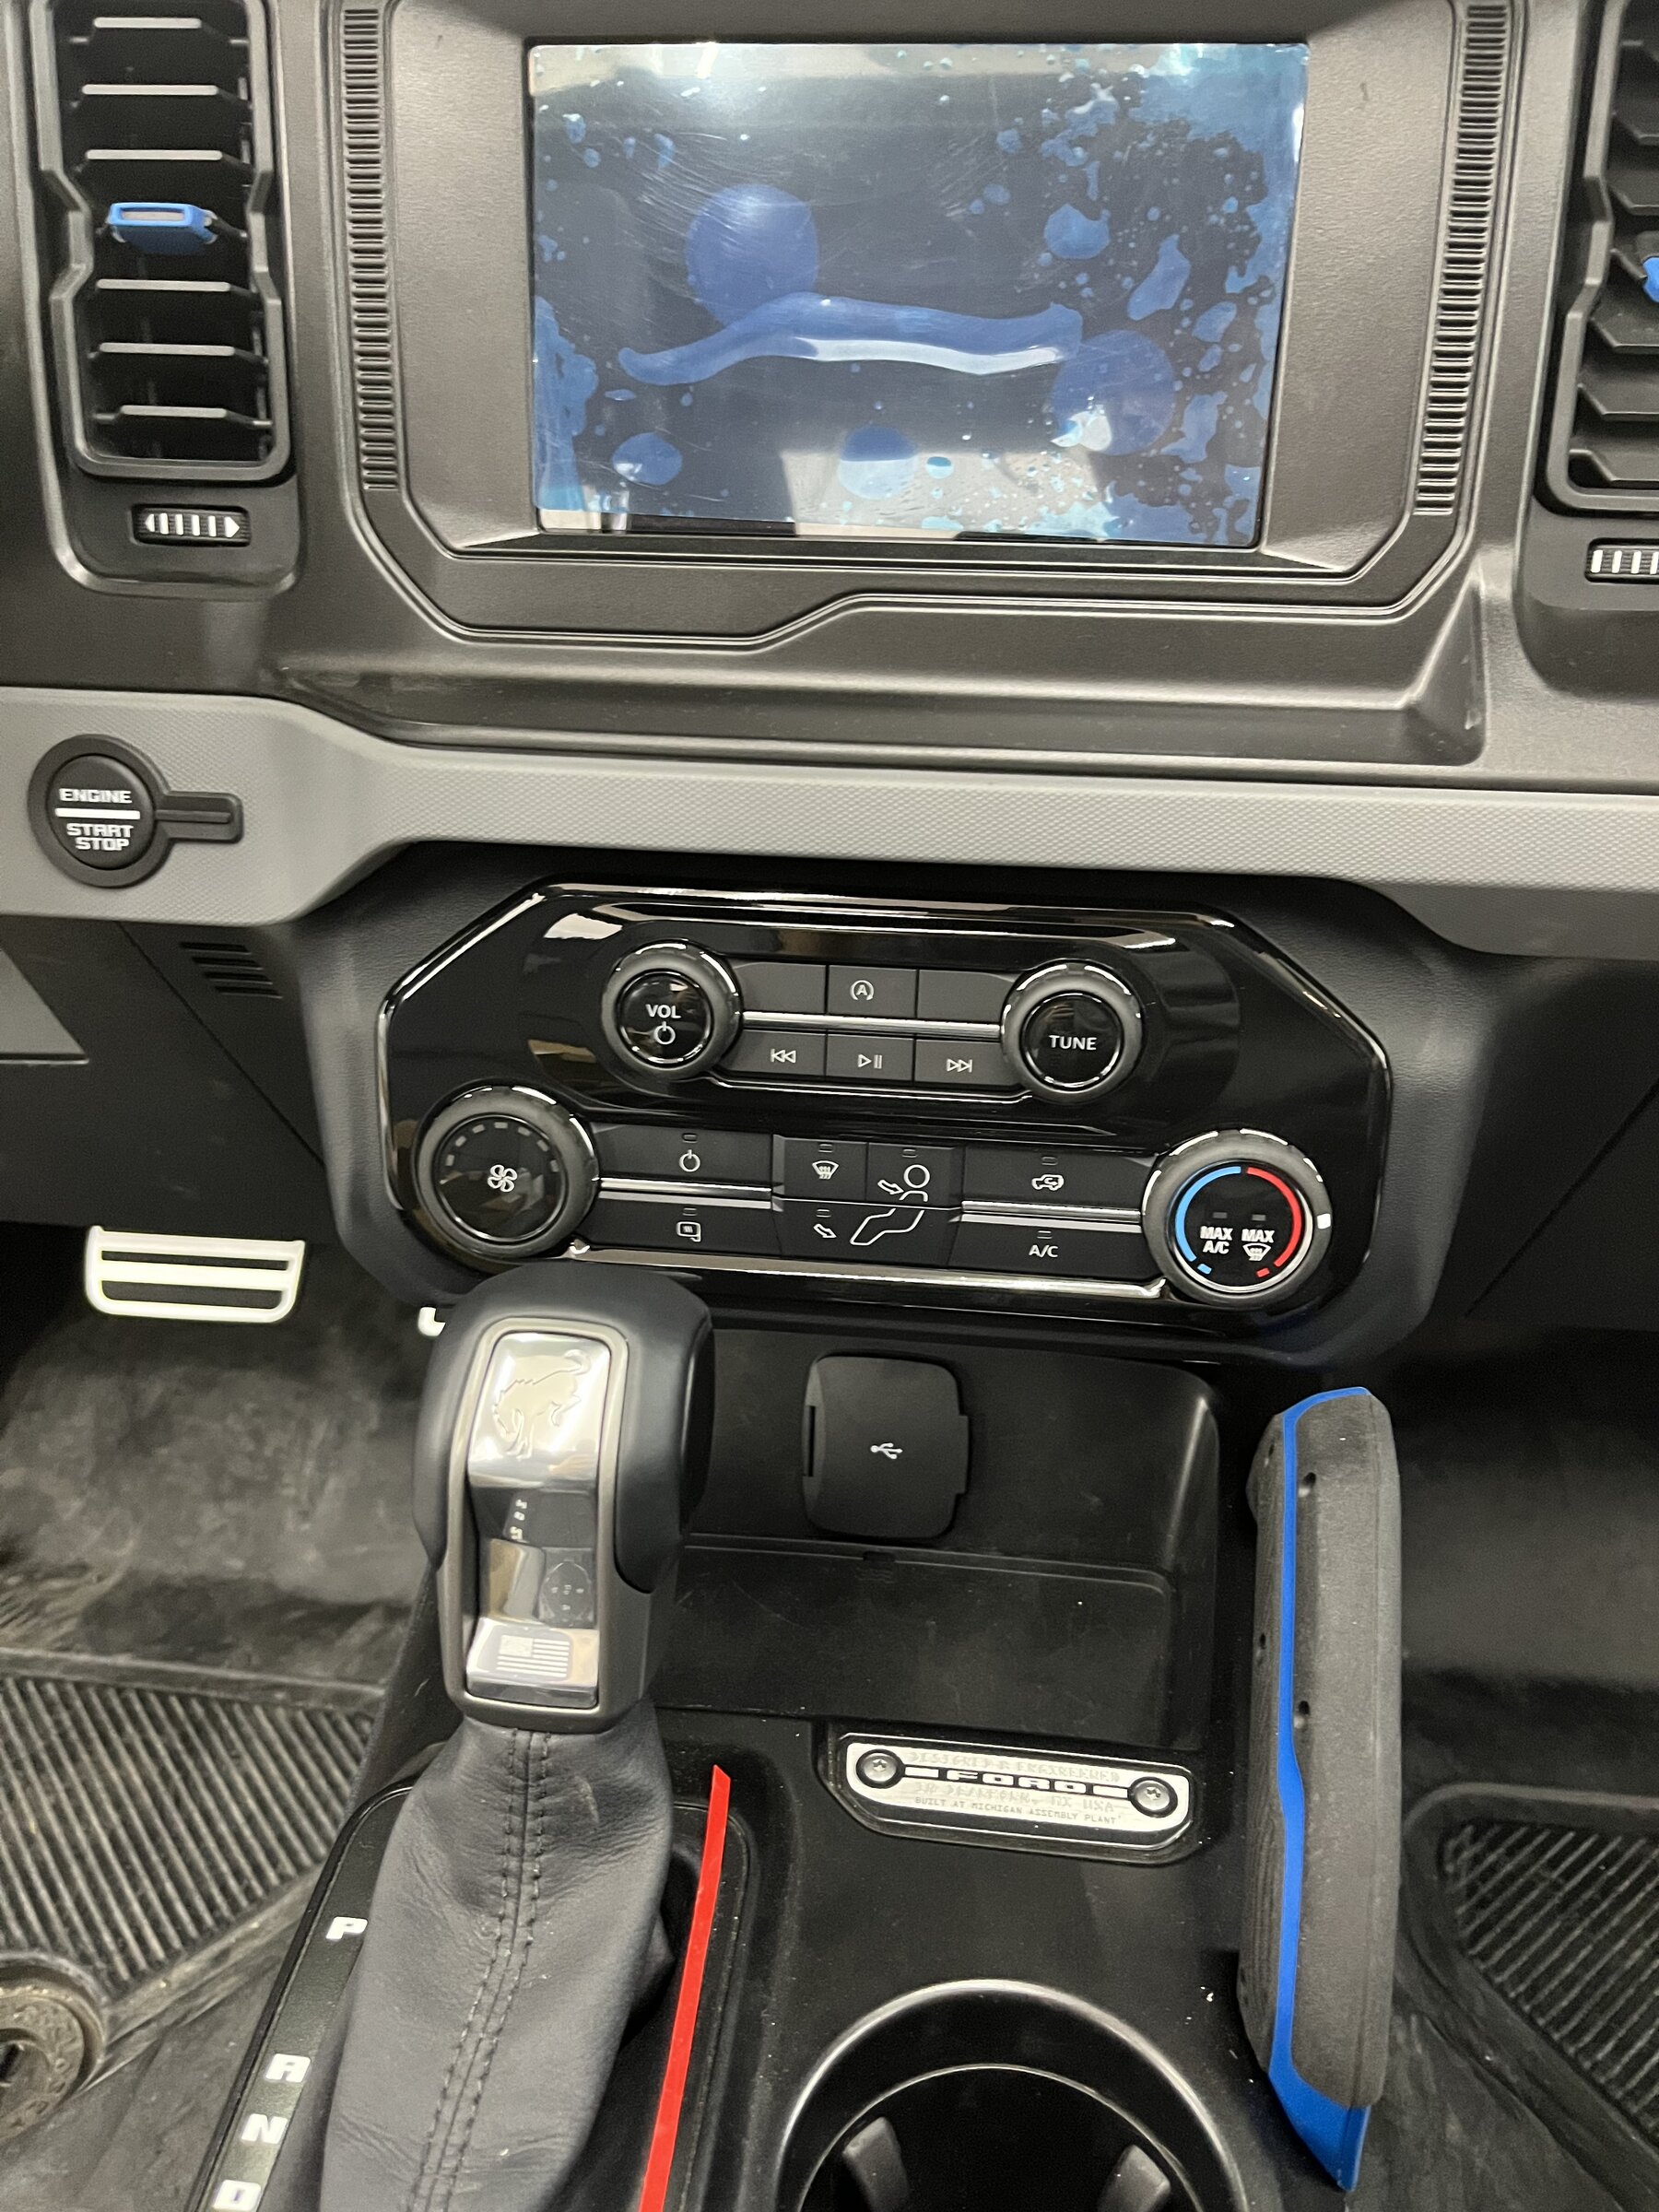 Ford Bronco Mabett Accelerator Brake Pedal Cover and Rest Pedal Cover & Volume Air Conditioner Knob Control Panel Cover Coming Soon! lQDPDhtGfNqgNarNC9DND8Cw45A9qm9jXpwCRCj-0EDDAA_4032_3024